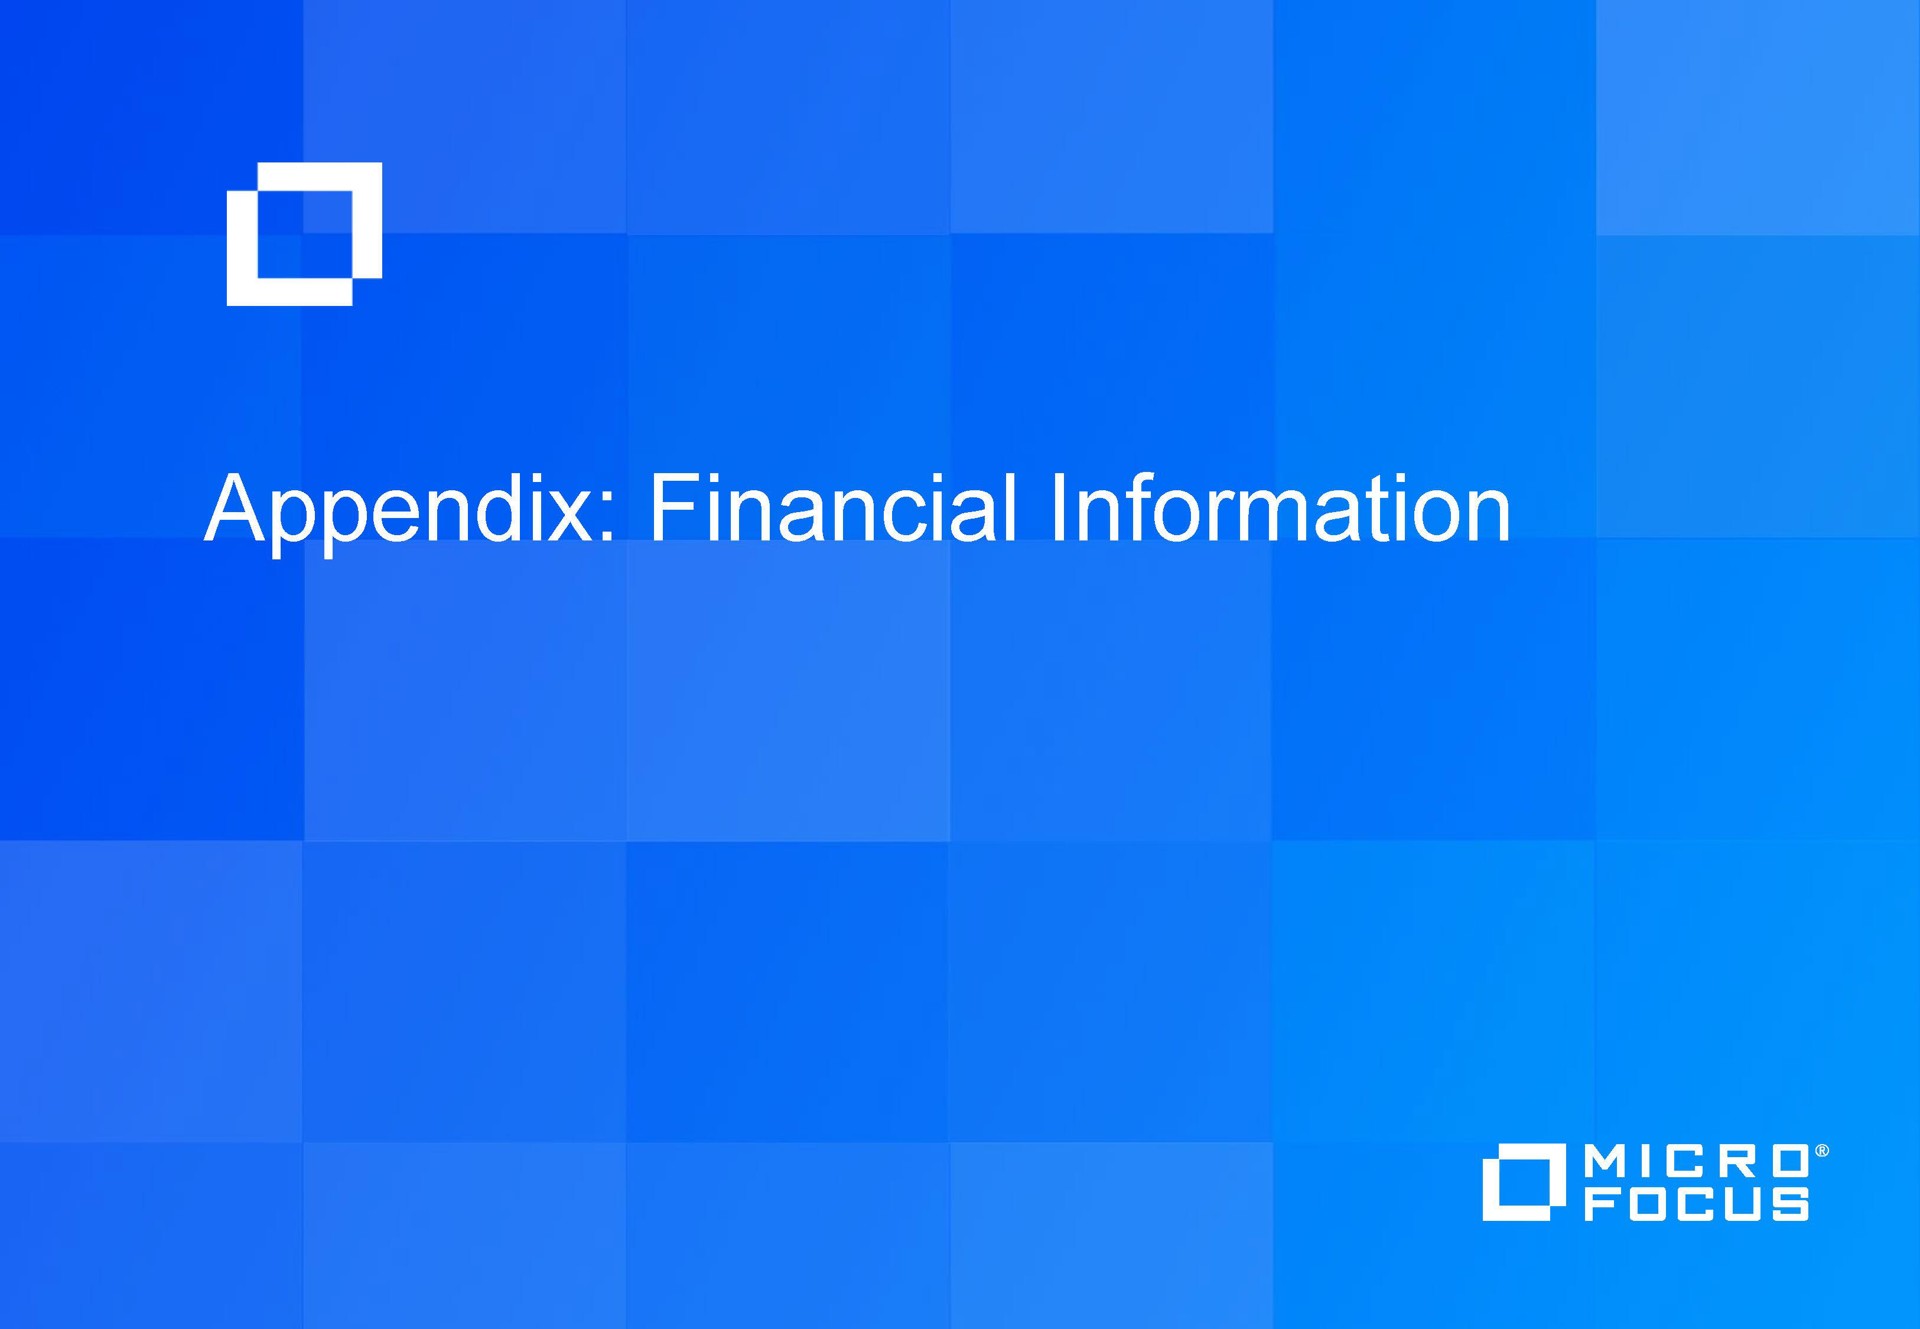 a appendix financial information | Micro Focus